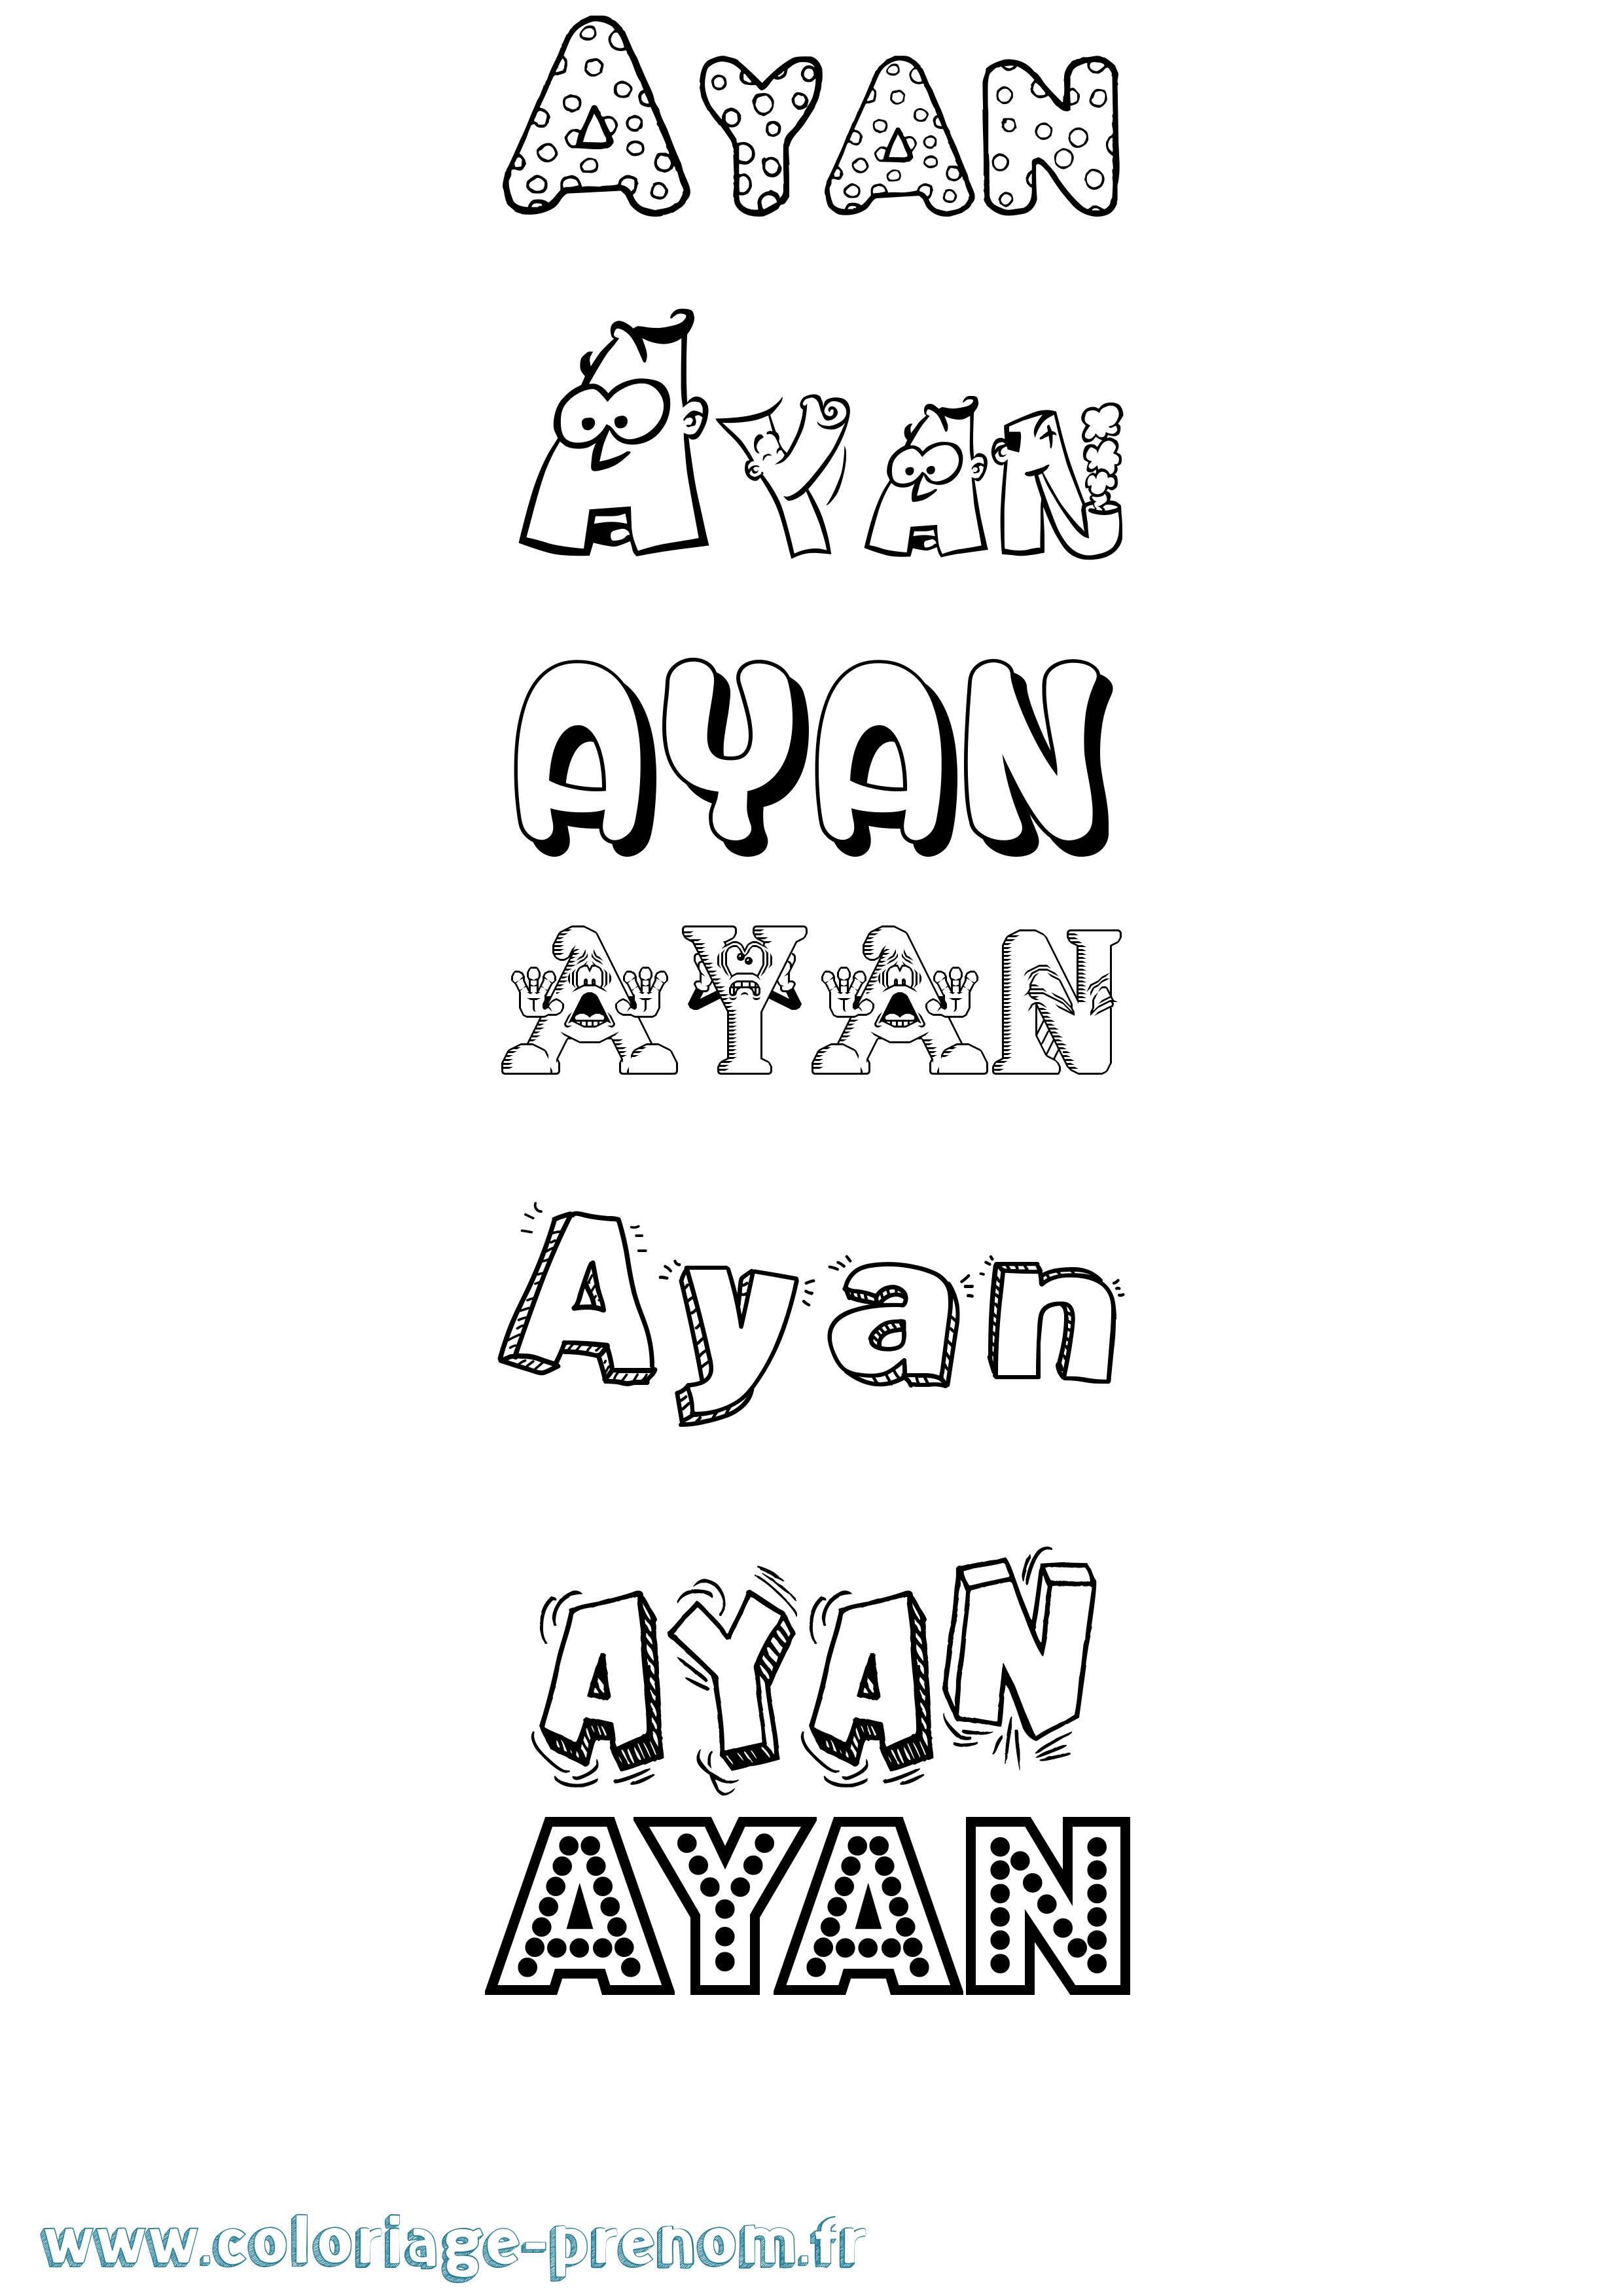 Coloriage prénom Ayan Fun